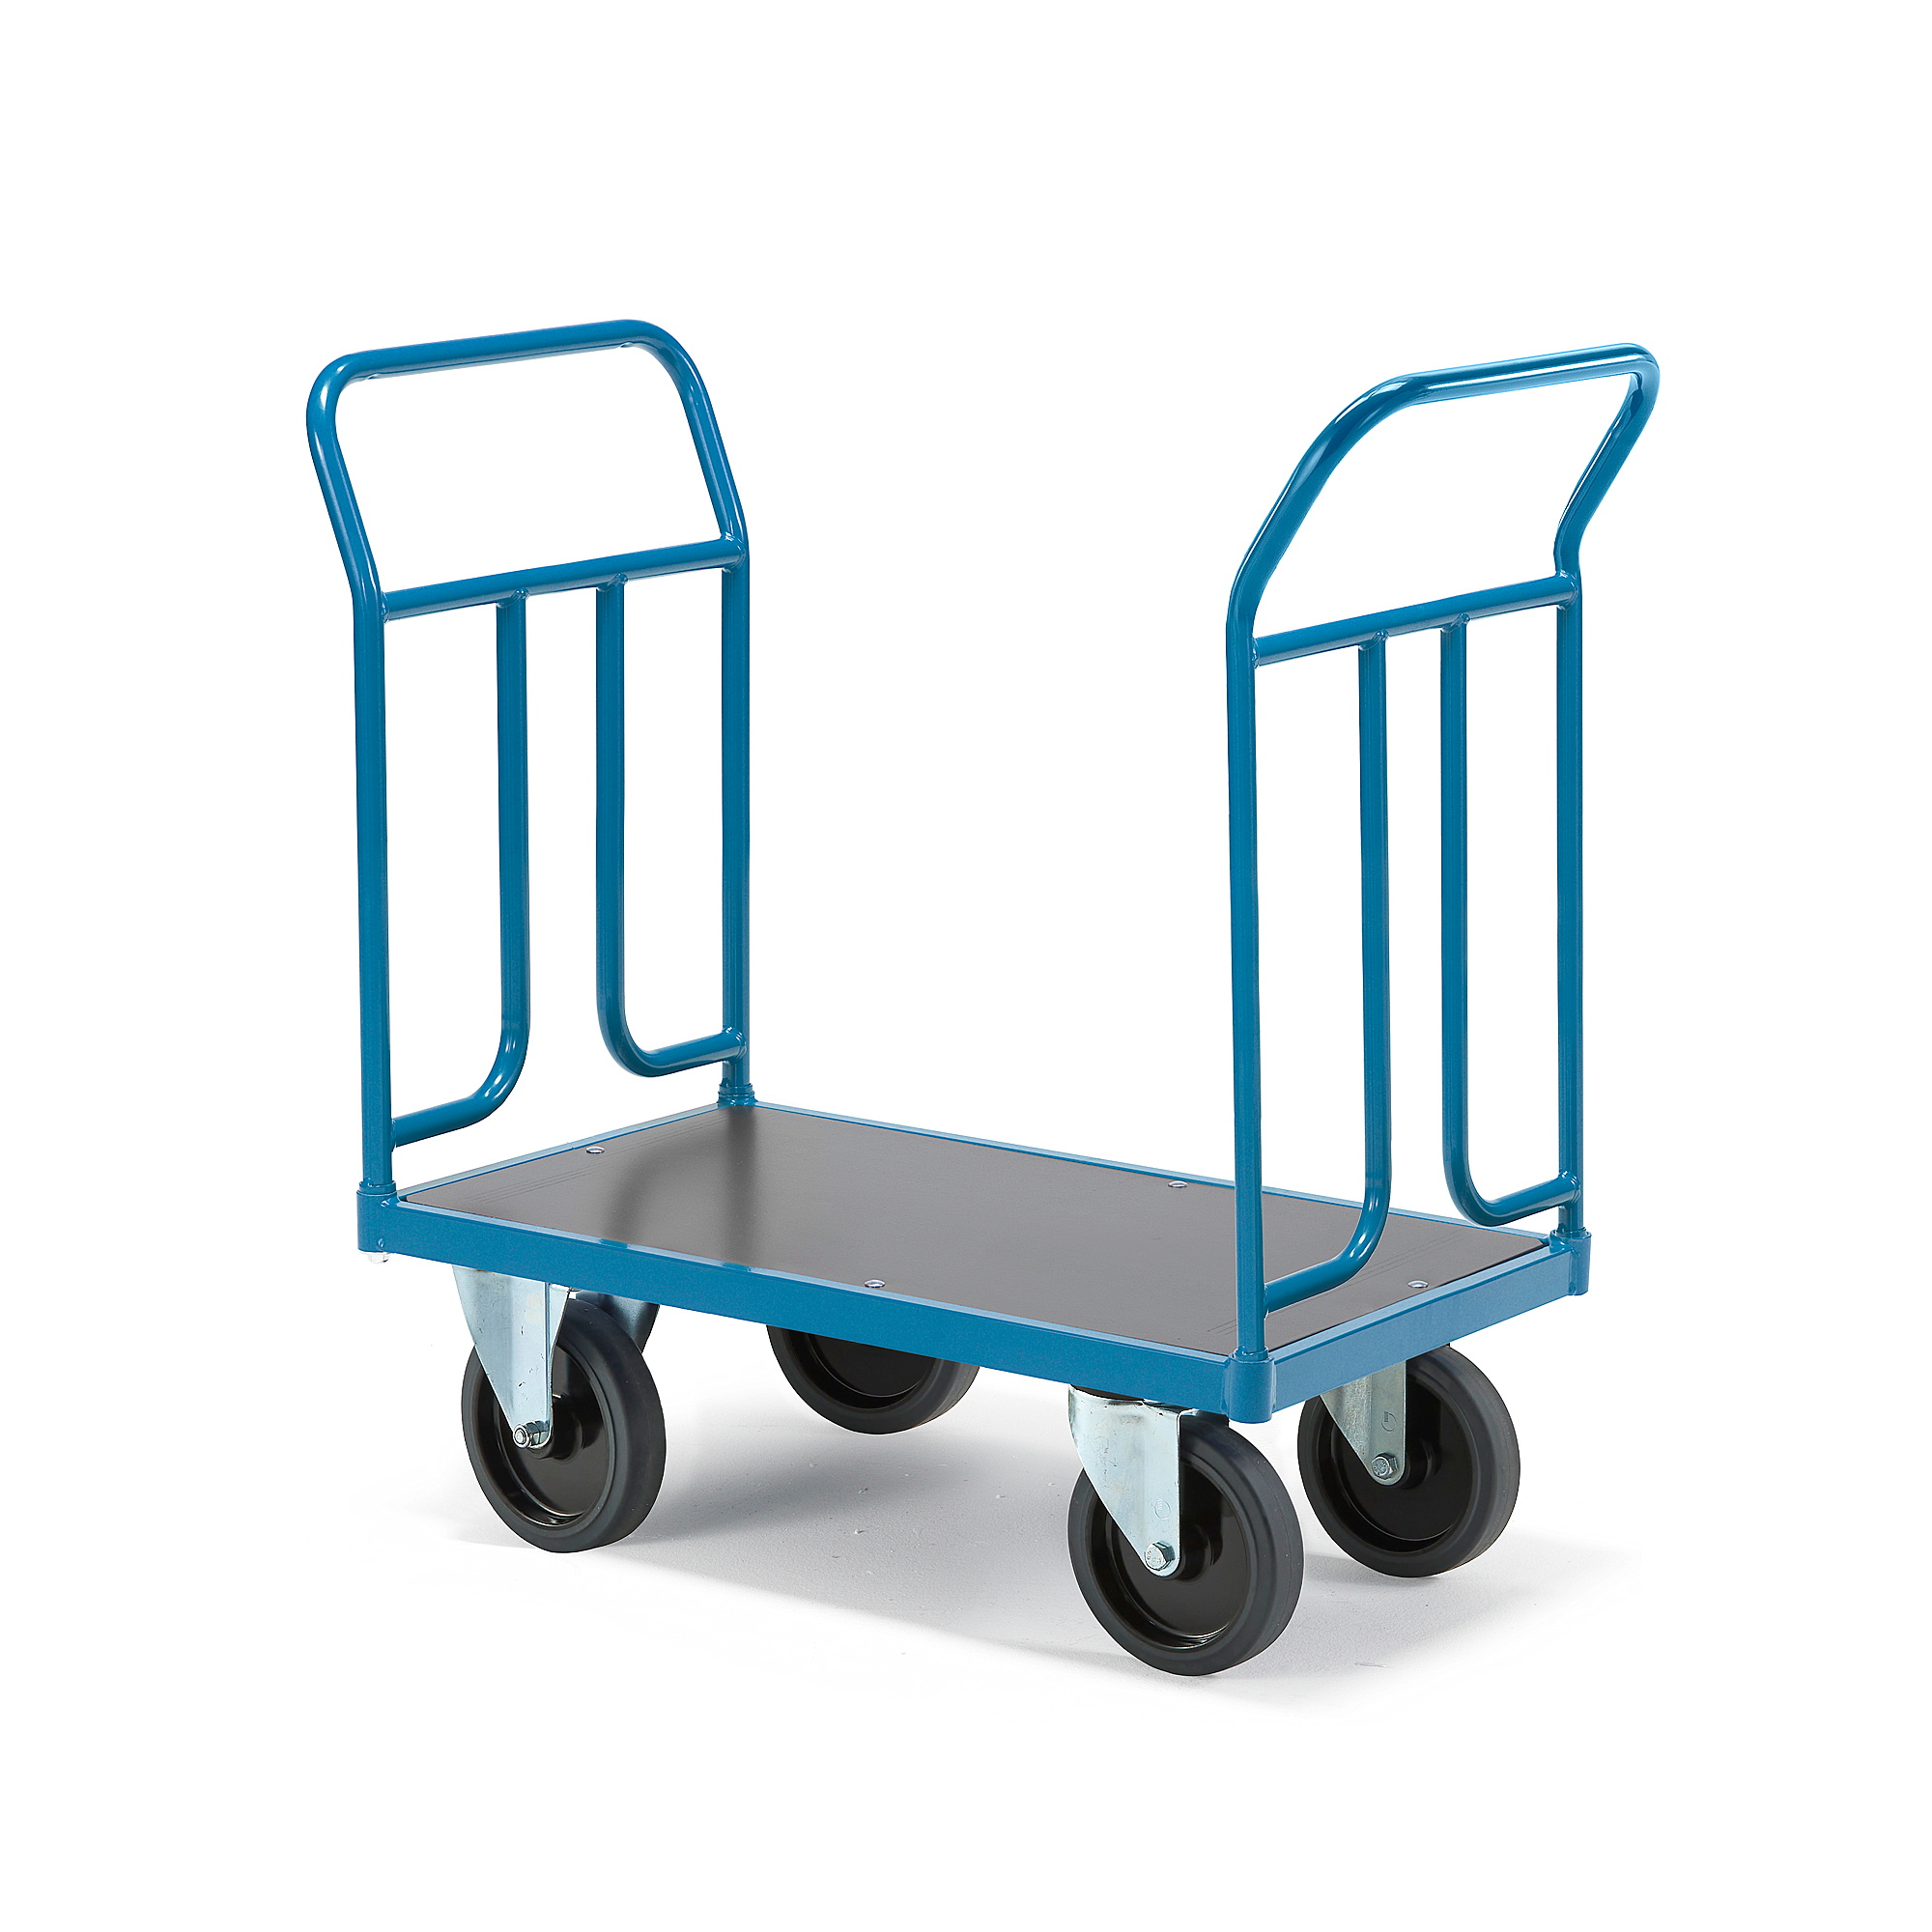 Plošinový vozík TRANSFER, 2 čelní trubkové rámy, 900x500 mm, 1000 kg, elastická gumová kola, bez brz